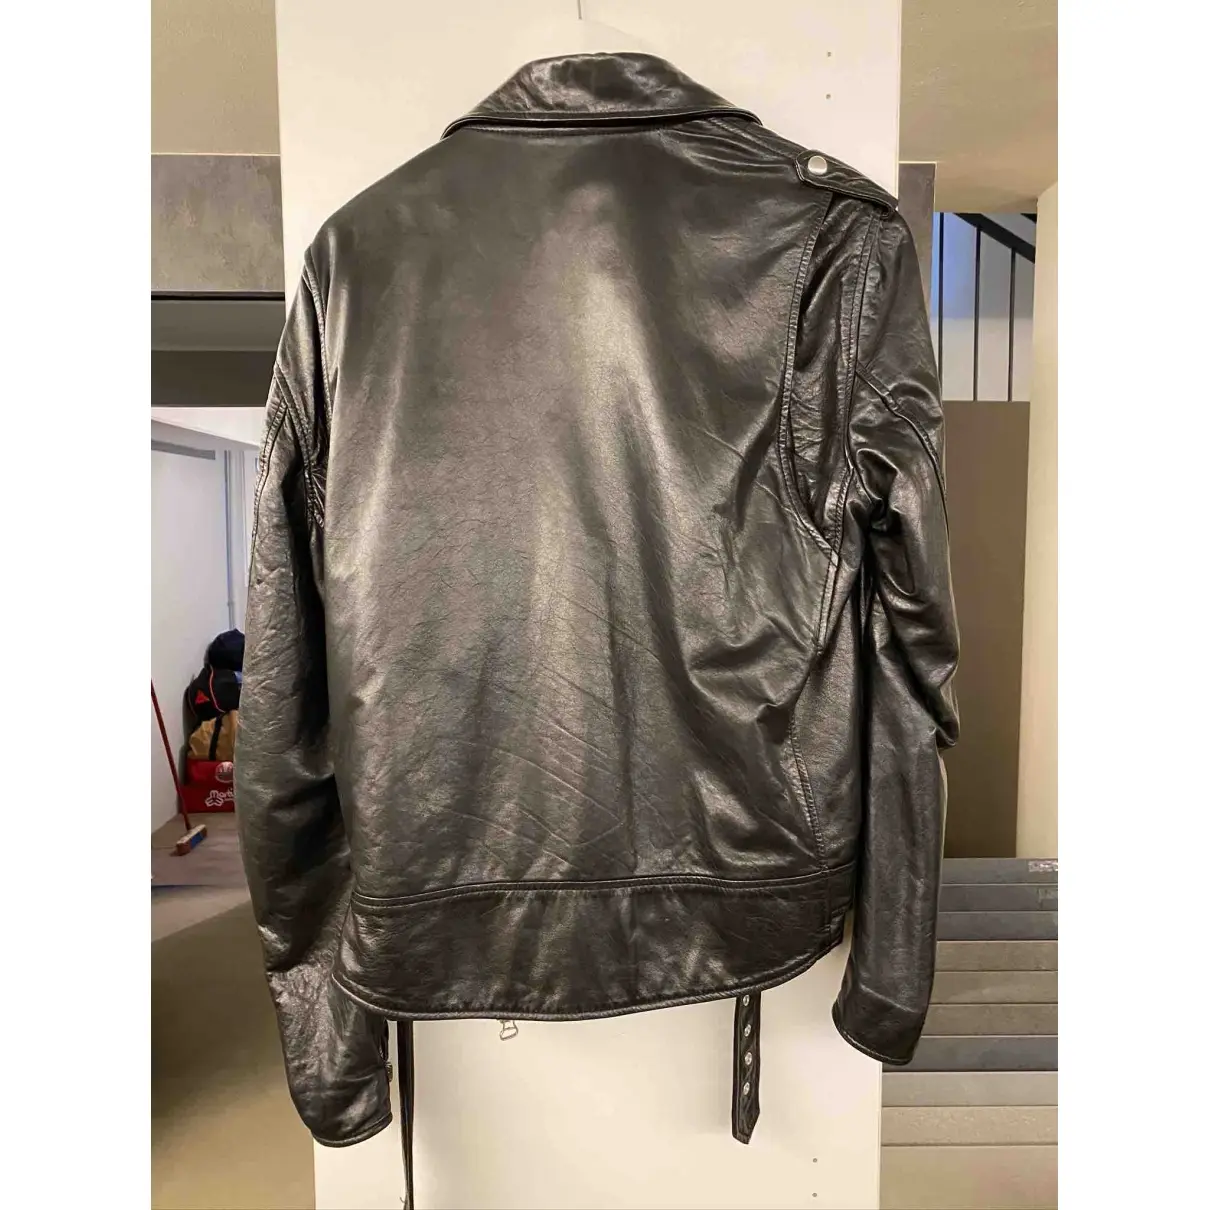 Buy 3.1 Phillip Lim Leather jacket online